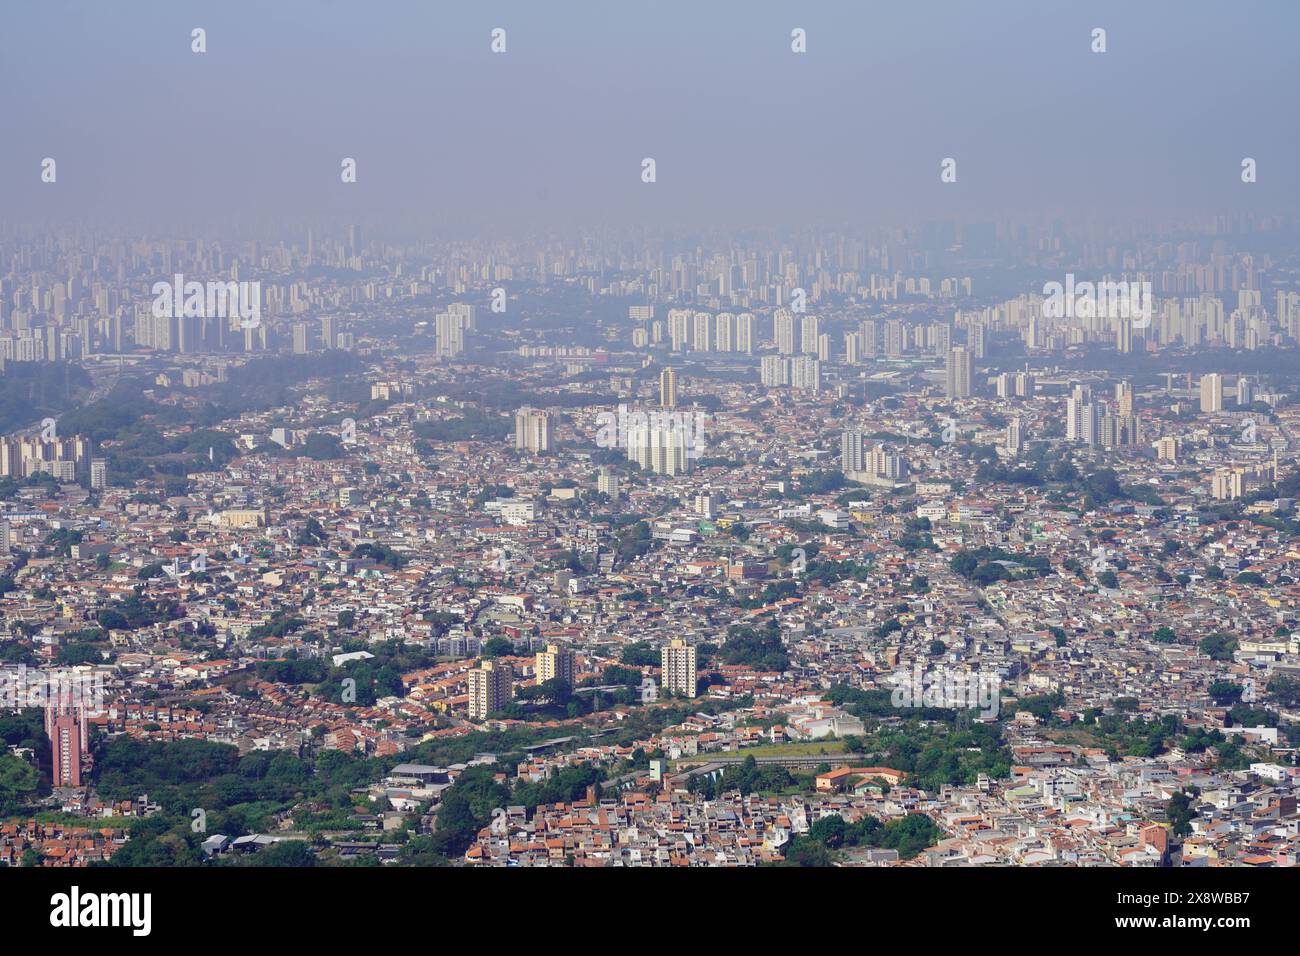 Cityspace of the Greater Sao Paulo large metropolitan area located in the Sao Paulo State in Brazil Stock Photo